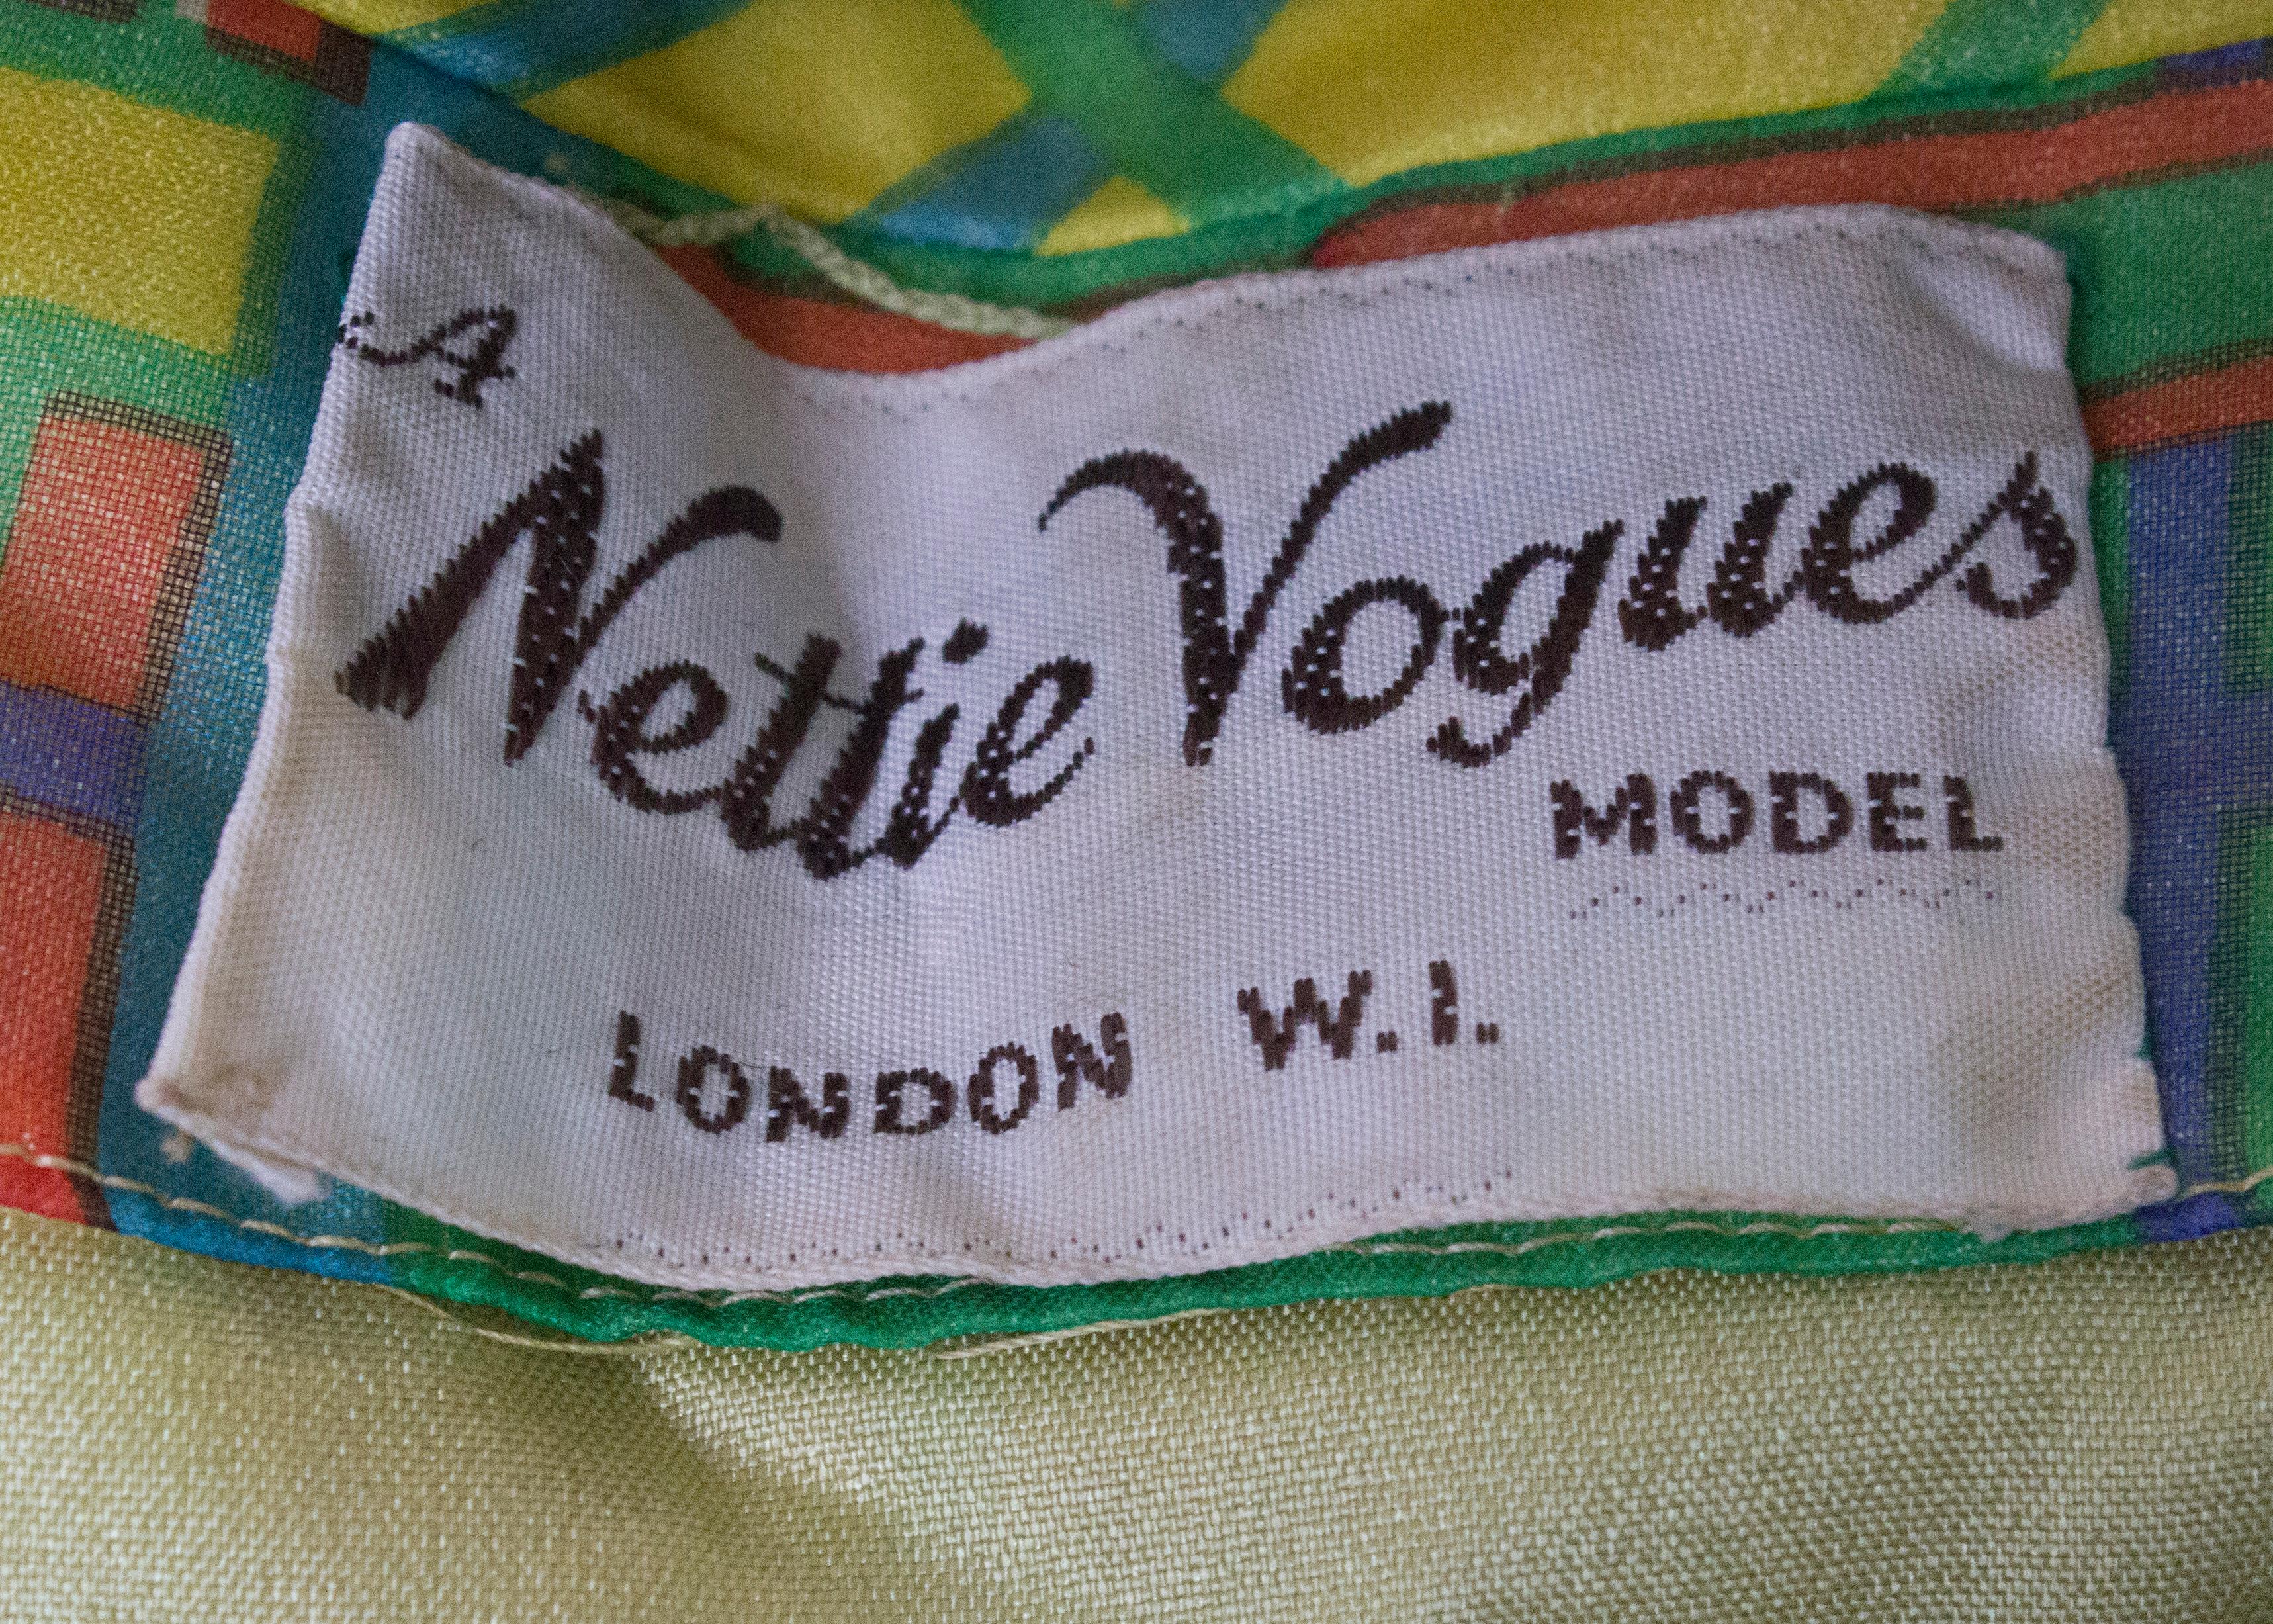 Vintage Silk Chiffon Dress by Nettie Vogue London 3